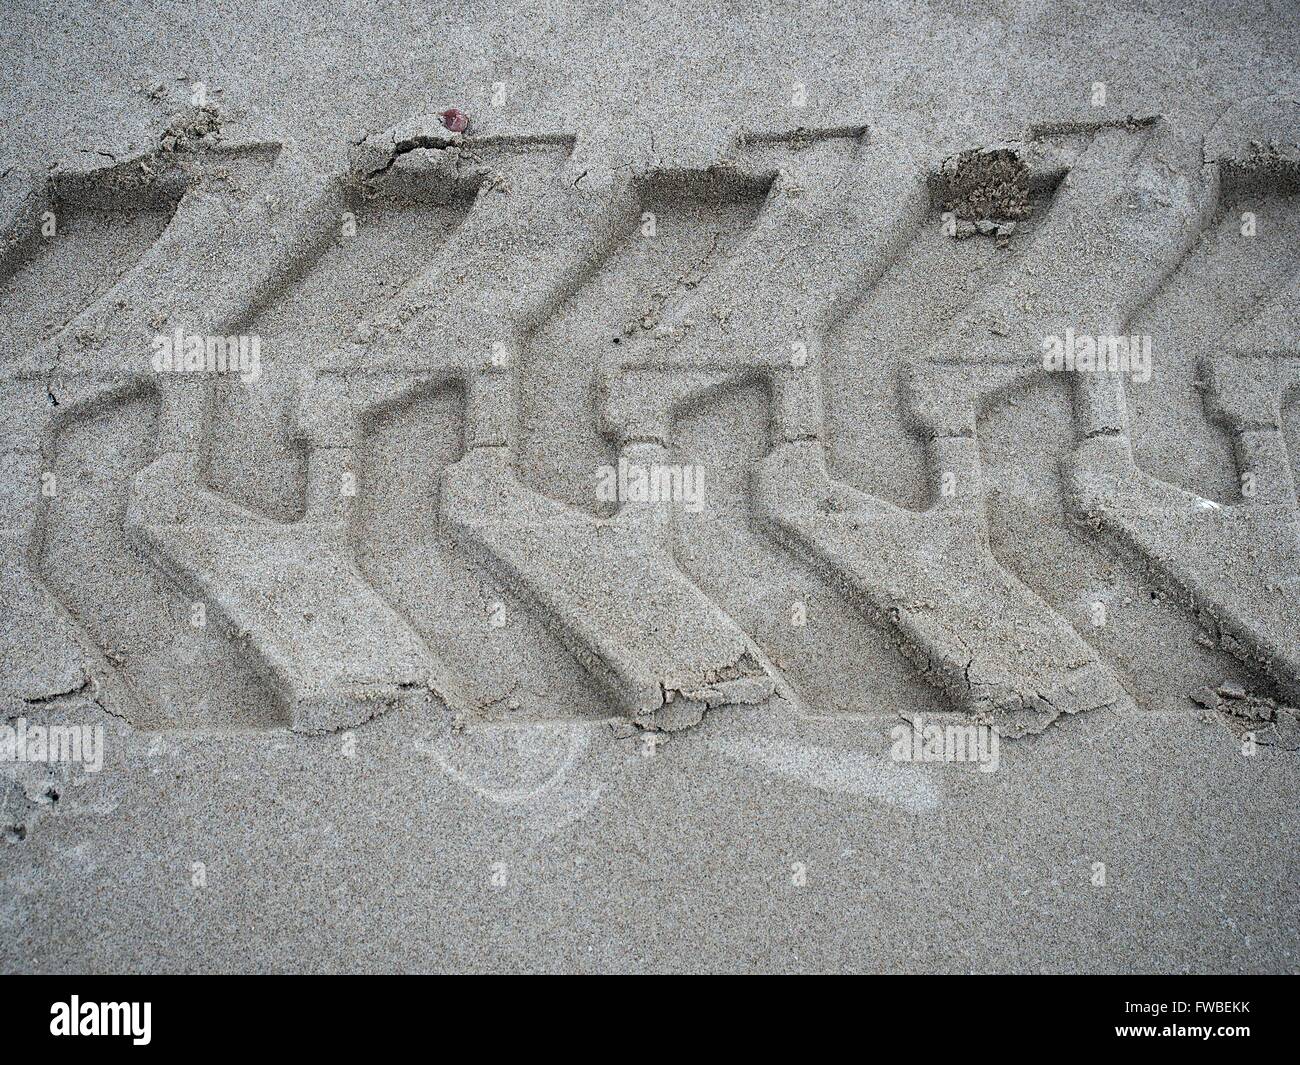 imprint tyre on sand Stock Photo